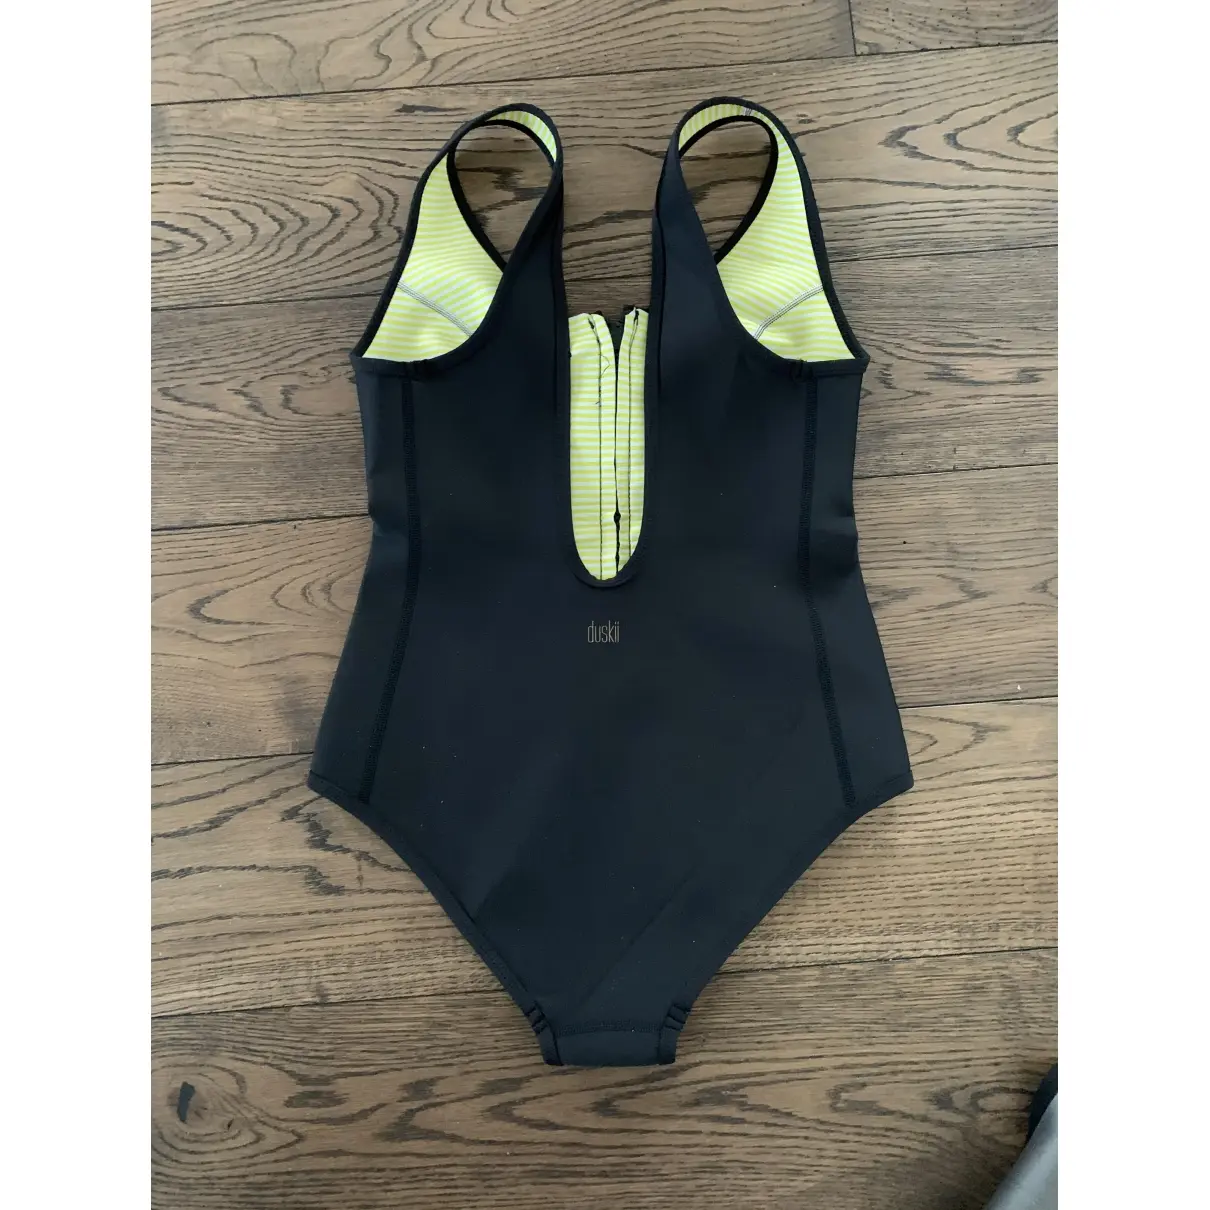 Duskii One-piece swimsuit for sale